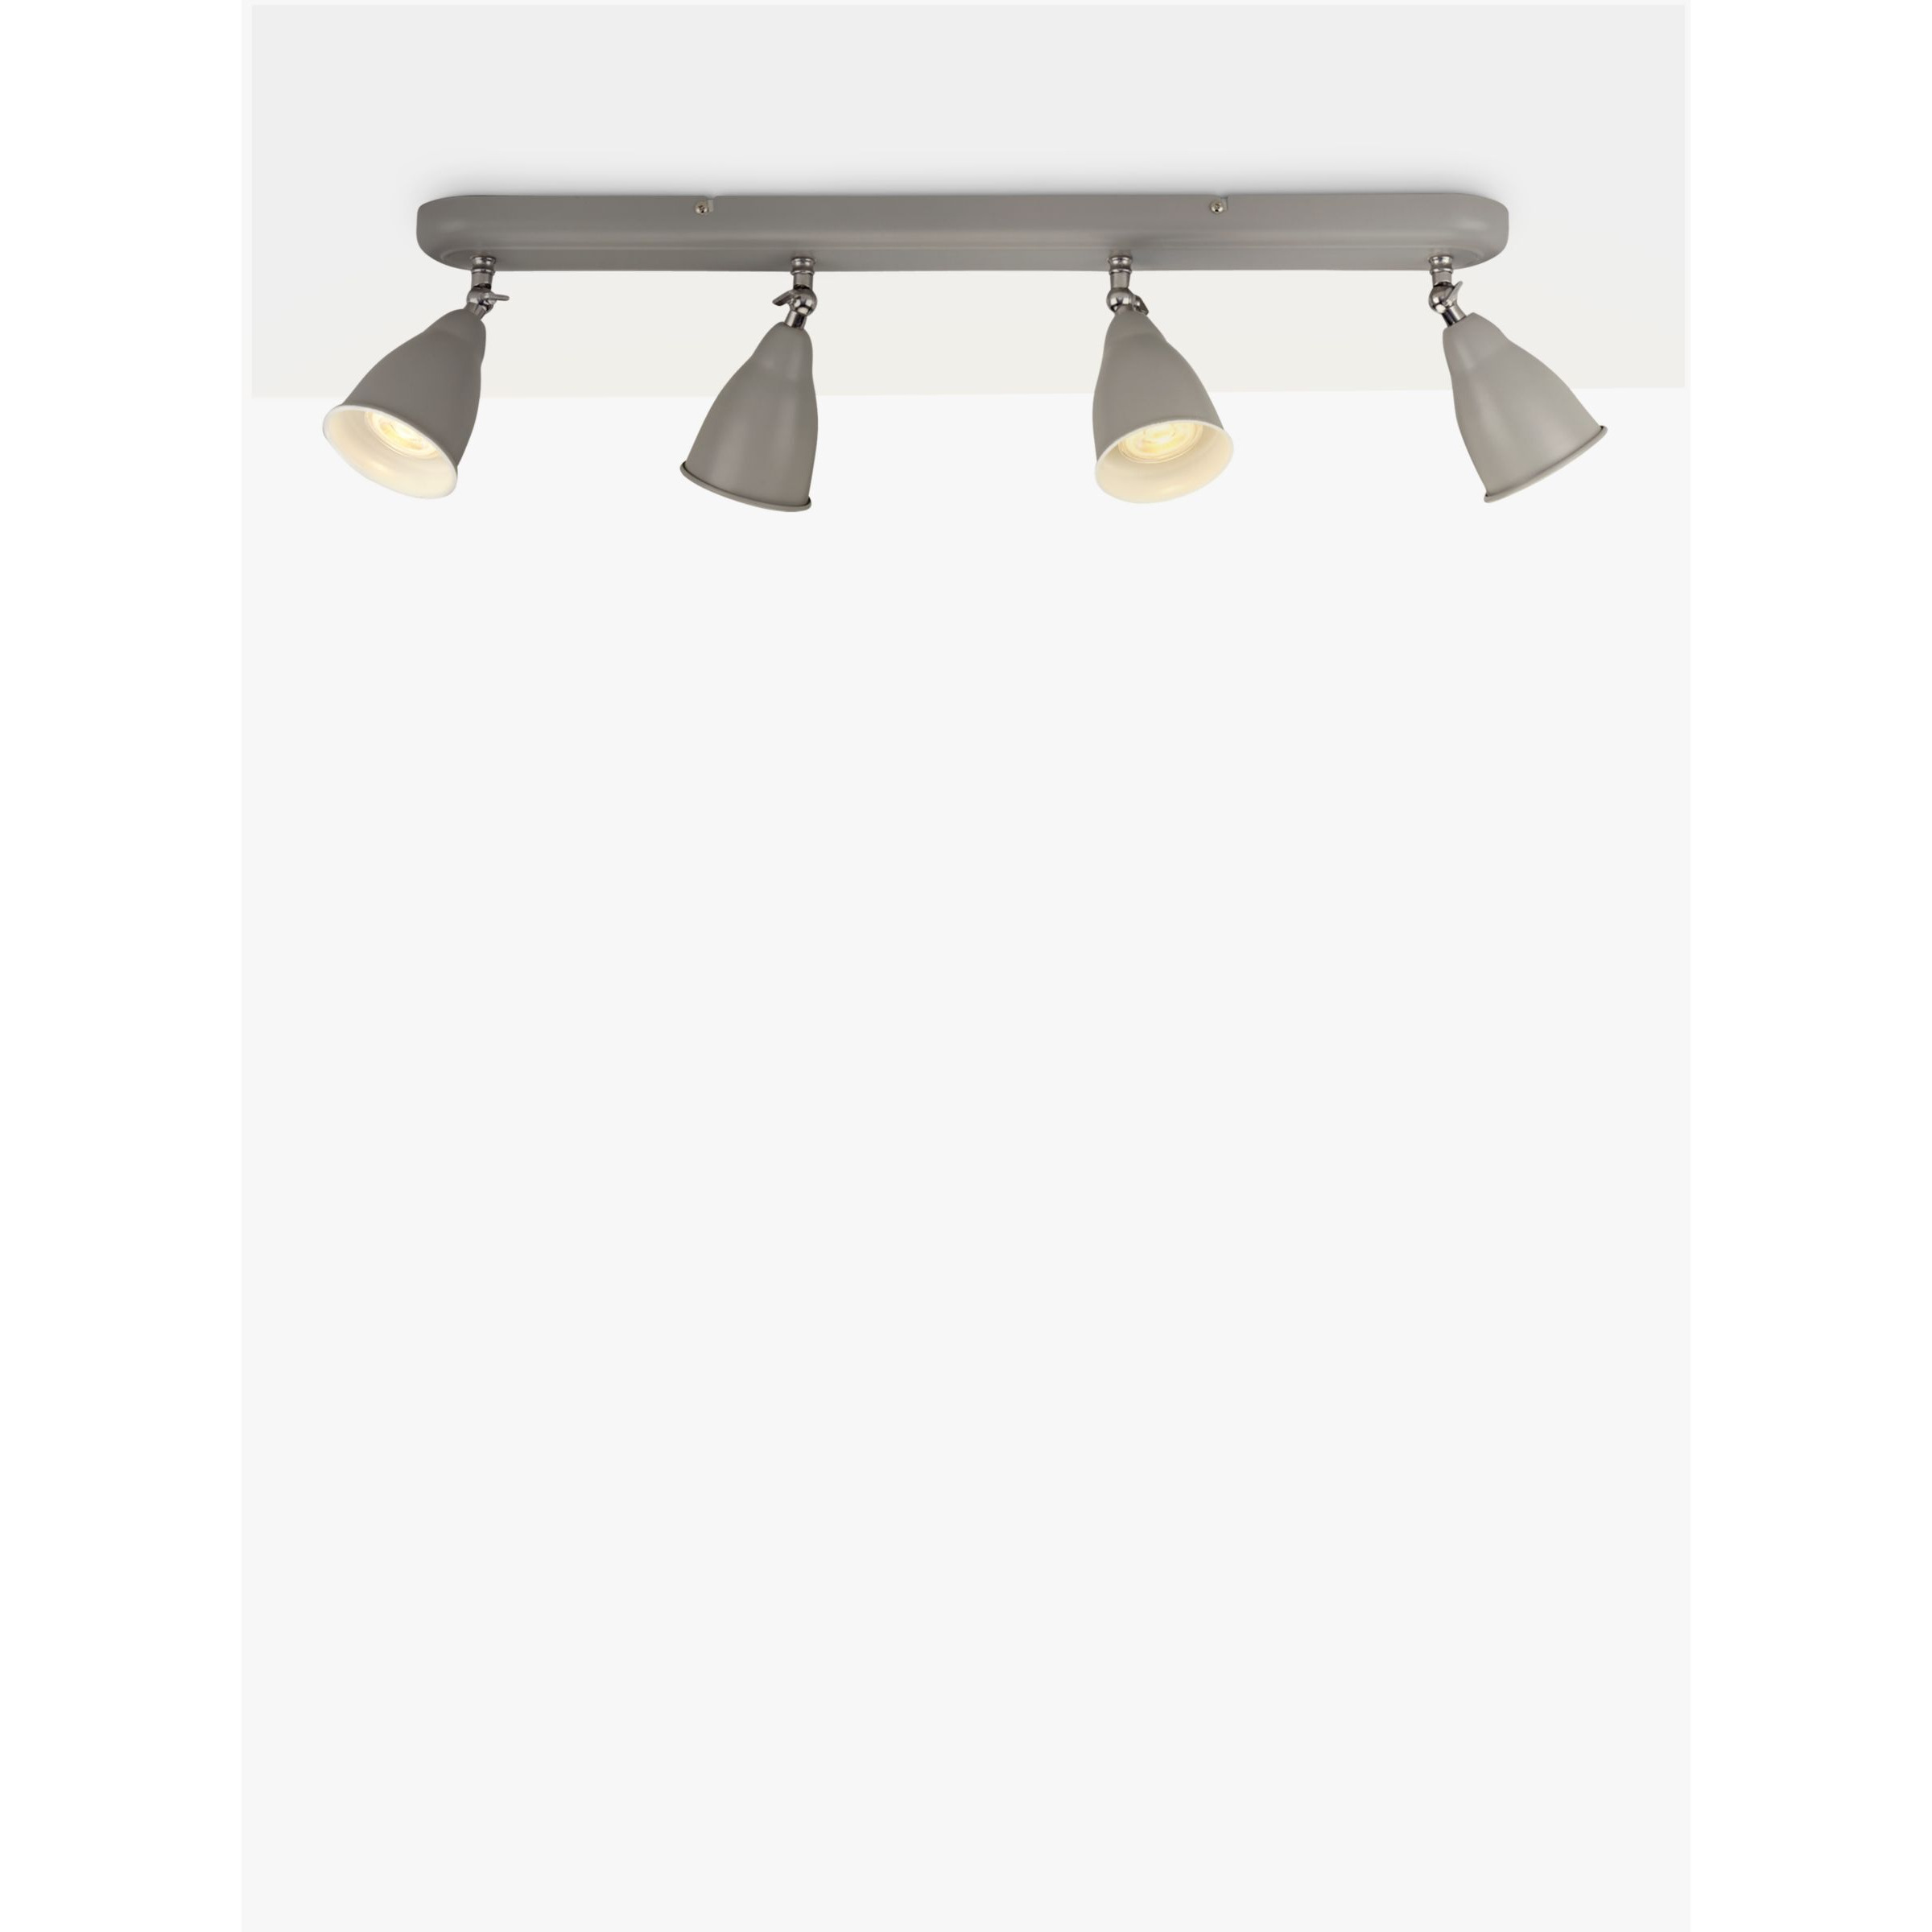 John Lewis Plymouth GU10 LED 4 Spotlight Ceiling Bar, Grey - image 1